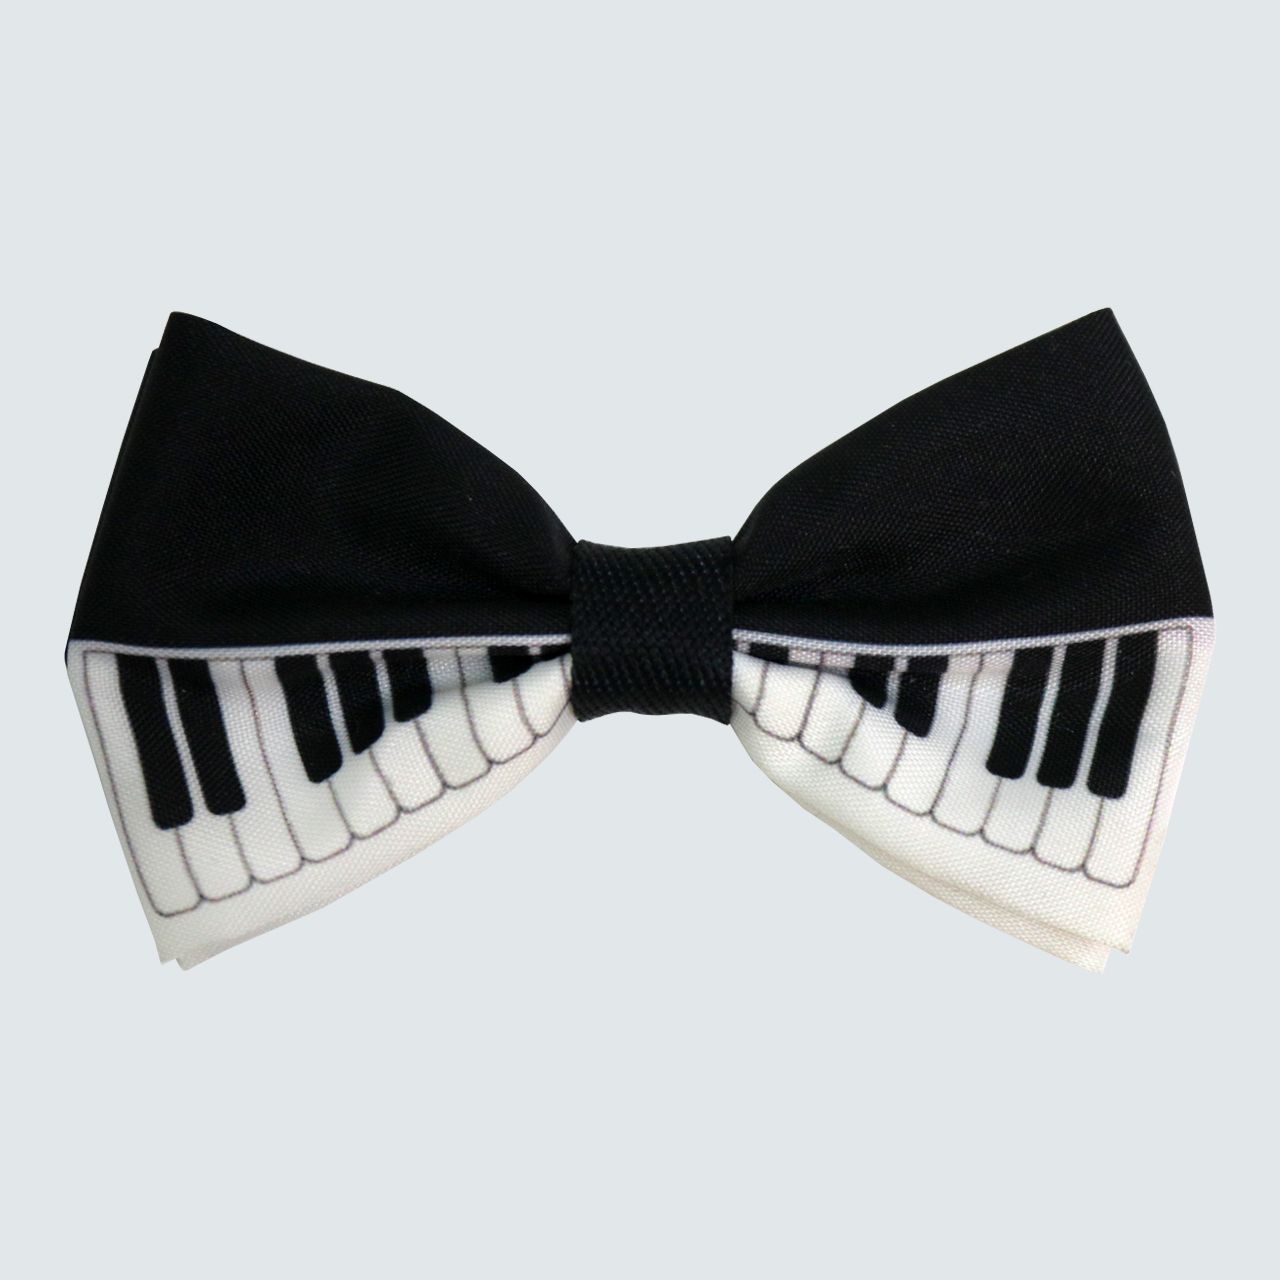 پاپیون مدل پیانو کد 115